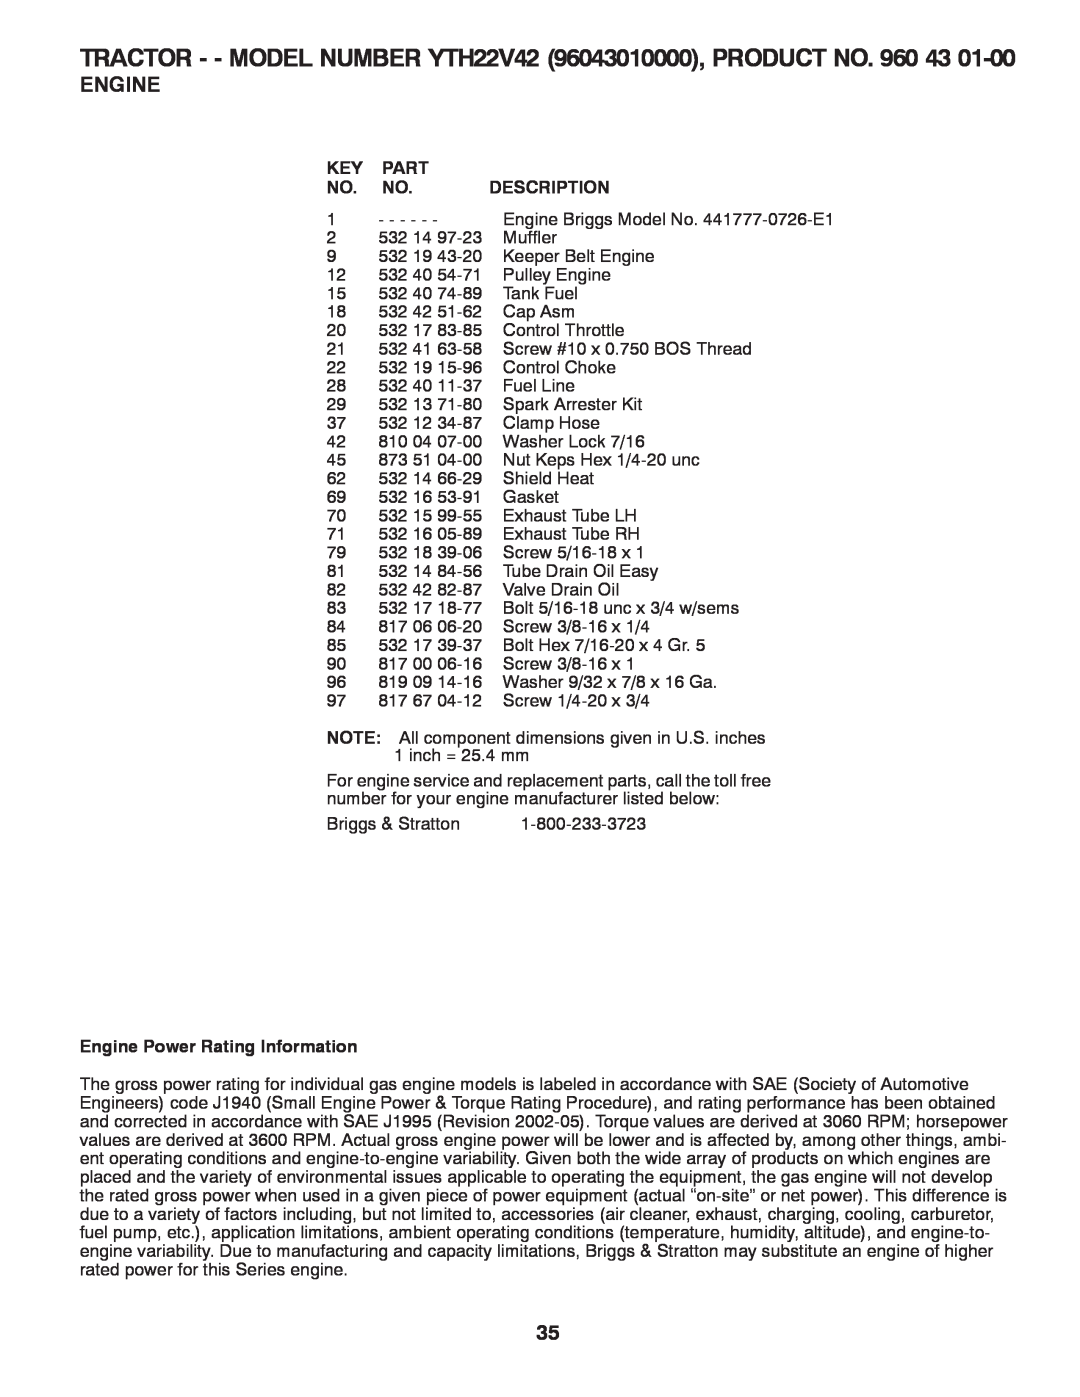 Husqvarna 960430173 owner manual Part, Description, Engine Power Rating Information 